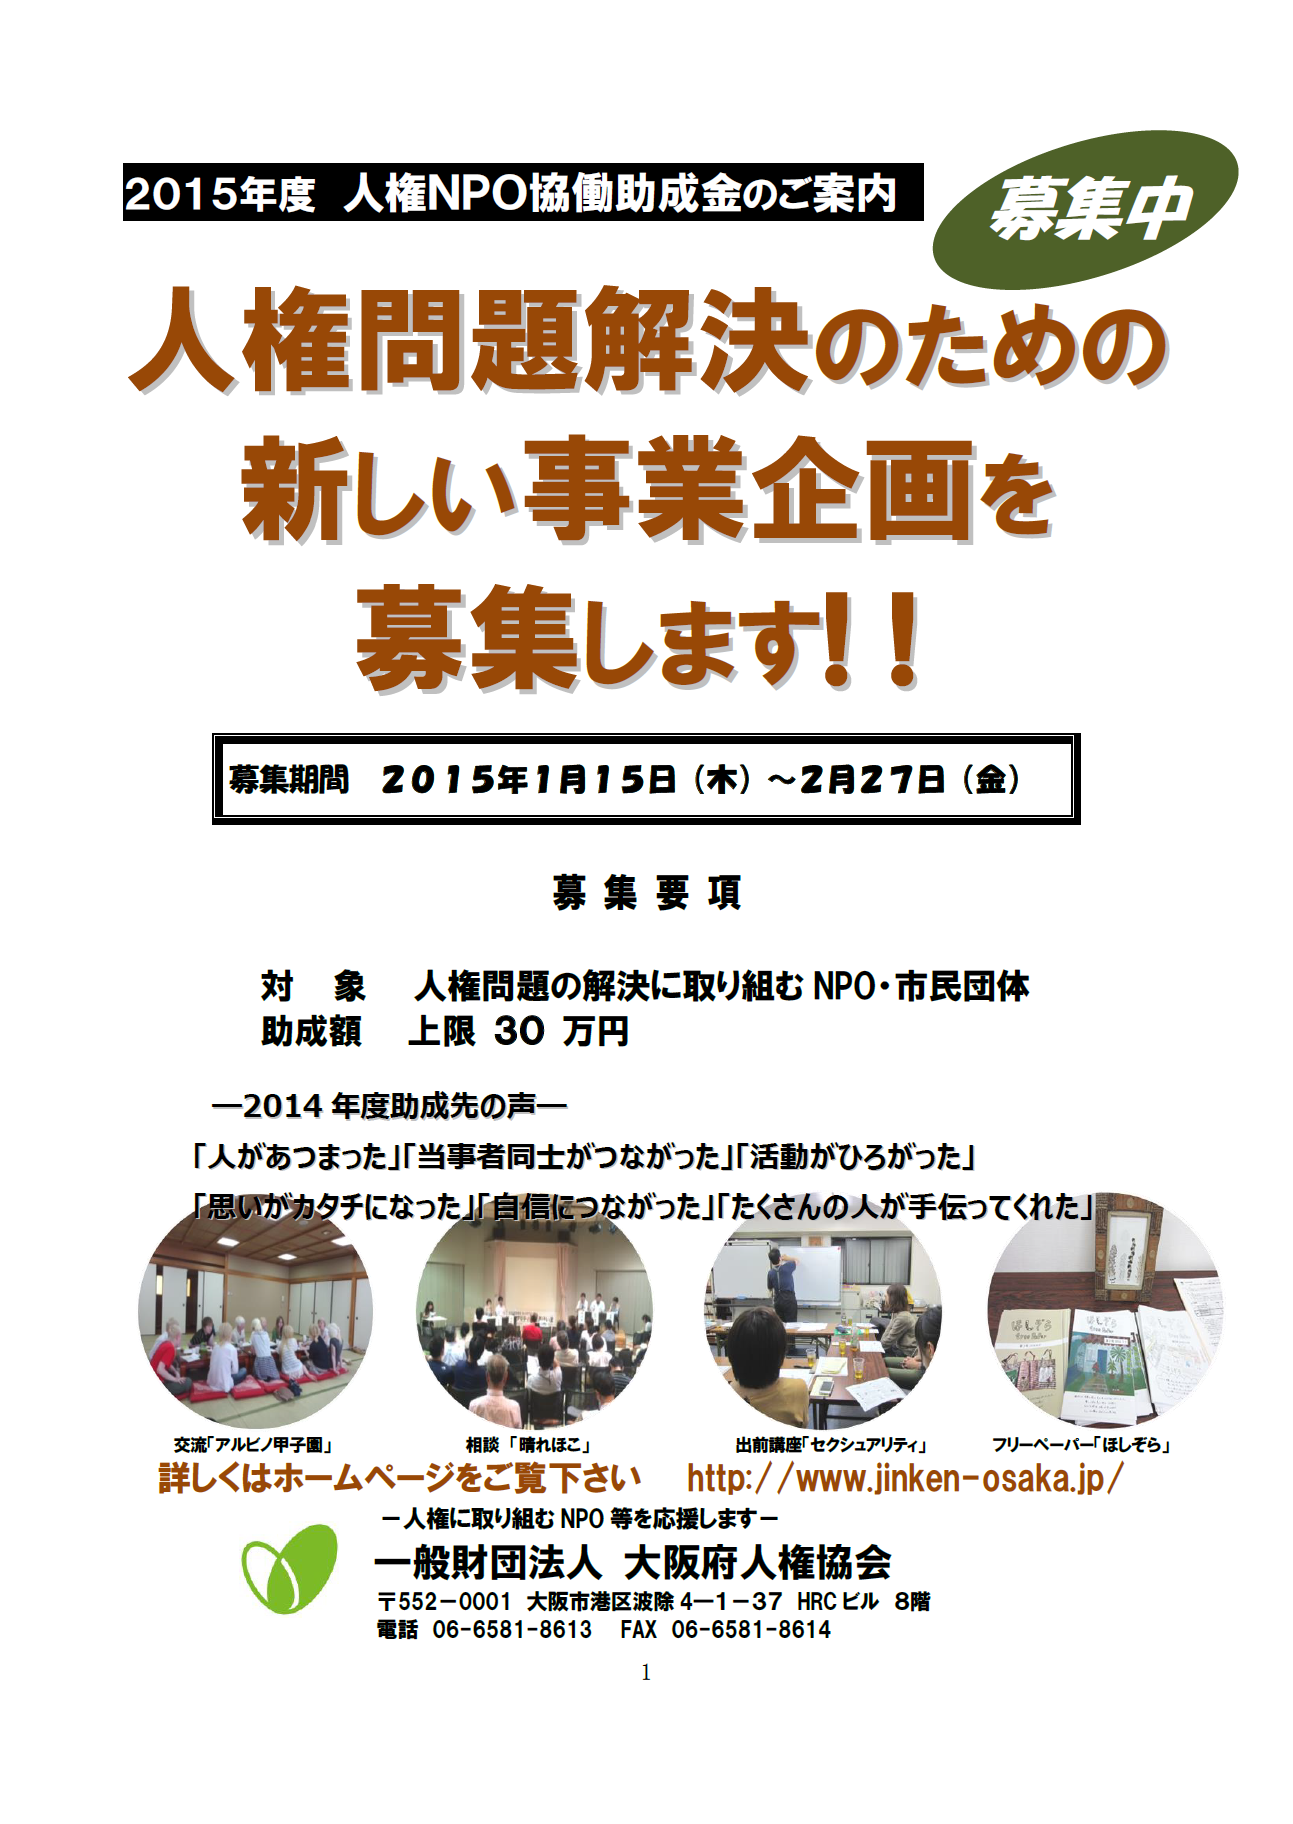 http://www.jinken-osaka.jp/2014/12/21/%E7%84%A1%E9%A1%8C2.png